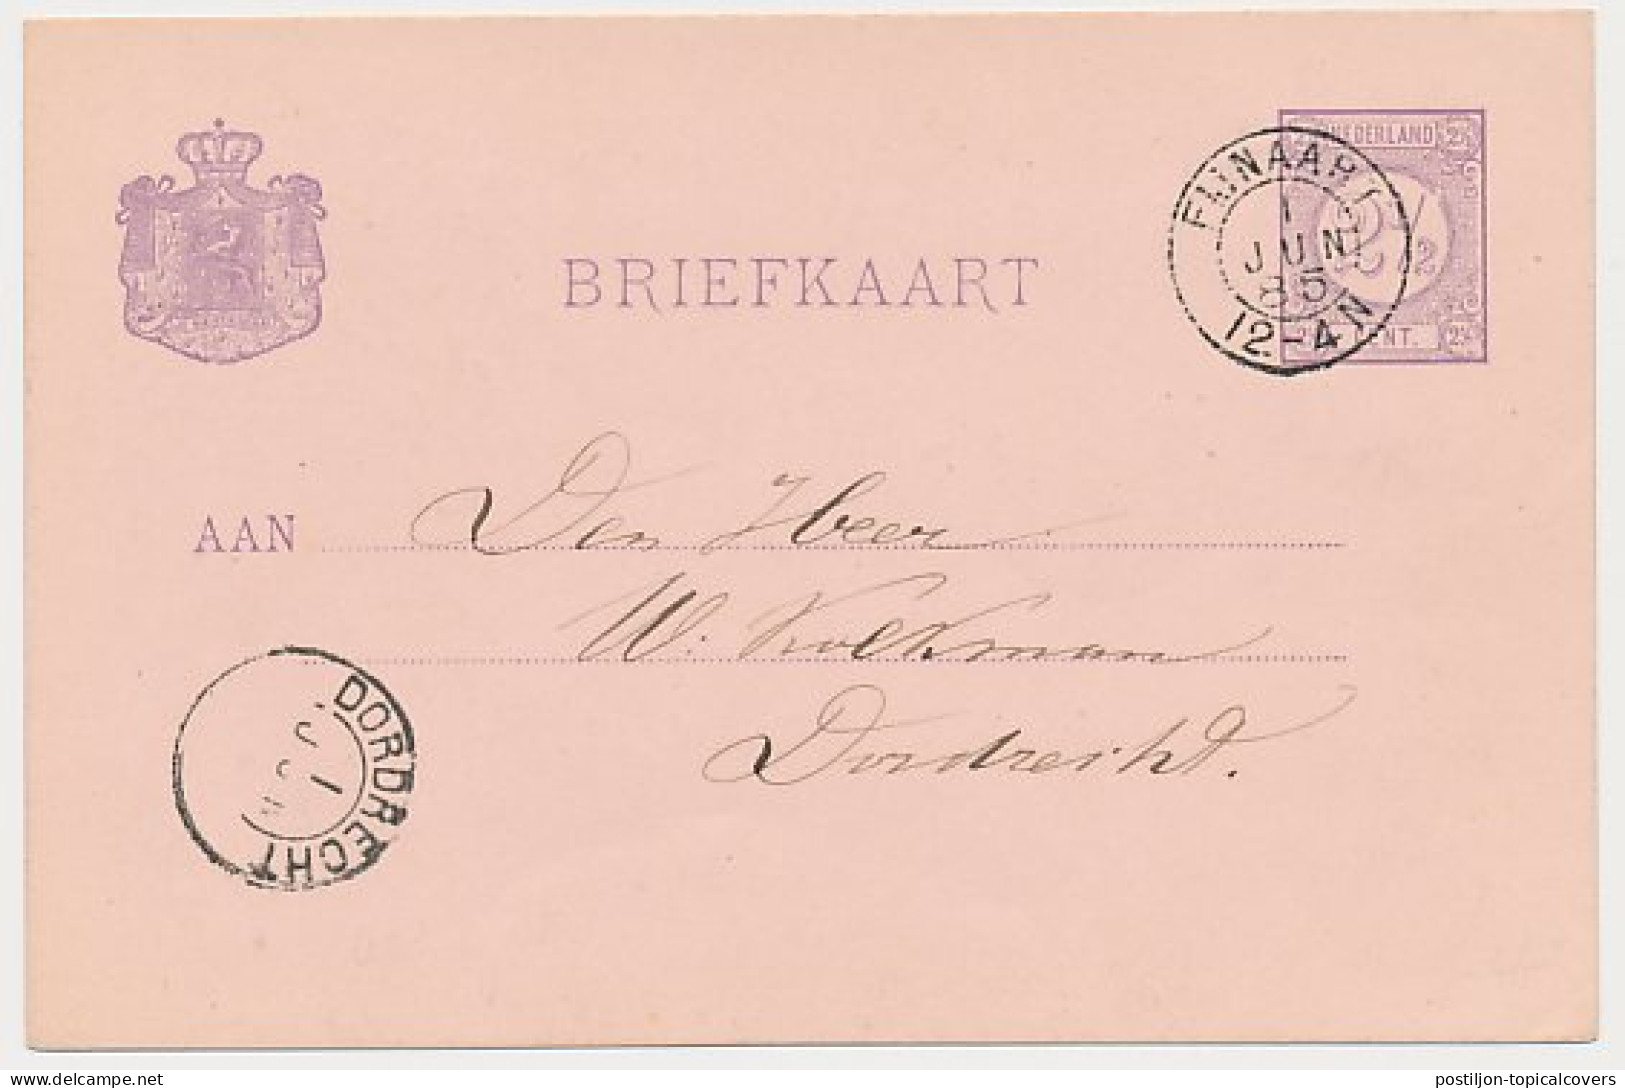 Kleinrondstempel Fijnaart 1885 - Non Classés